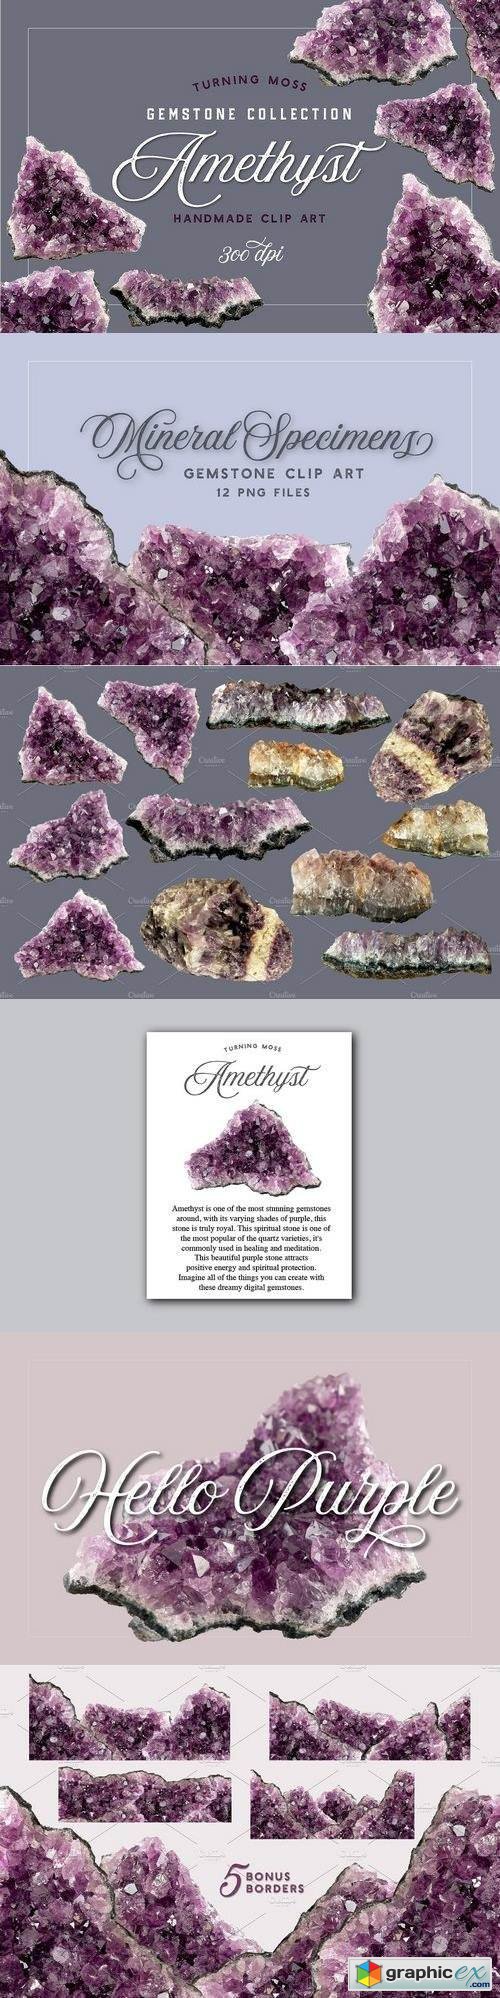 Amethyst - Gemstone Specimens